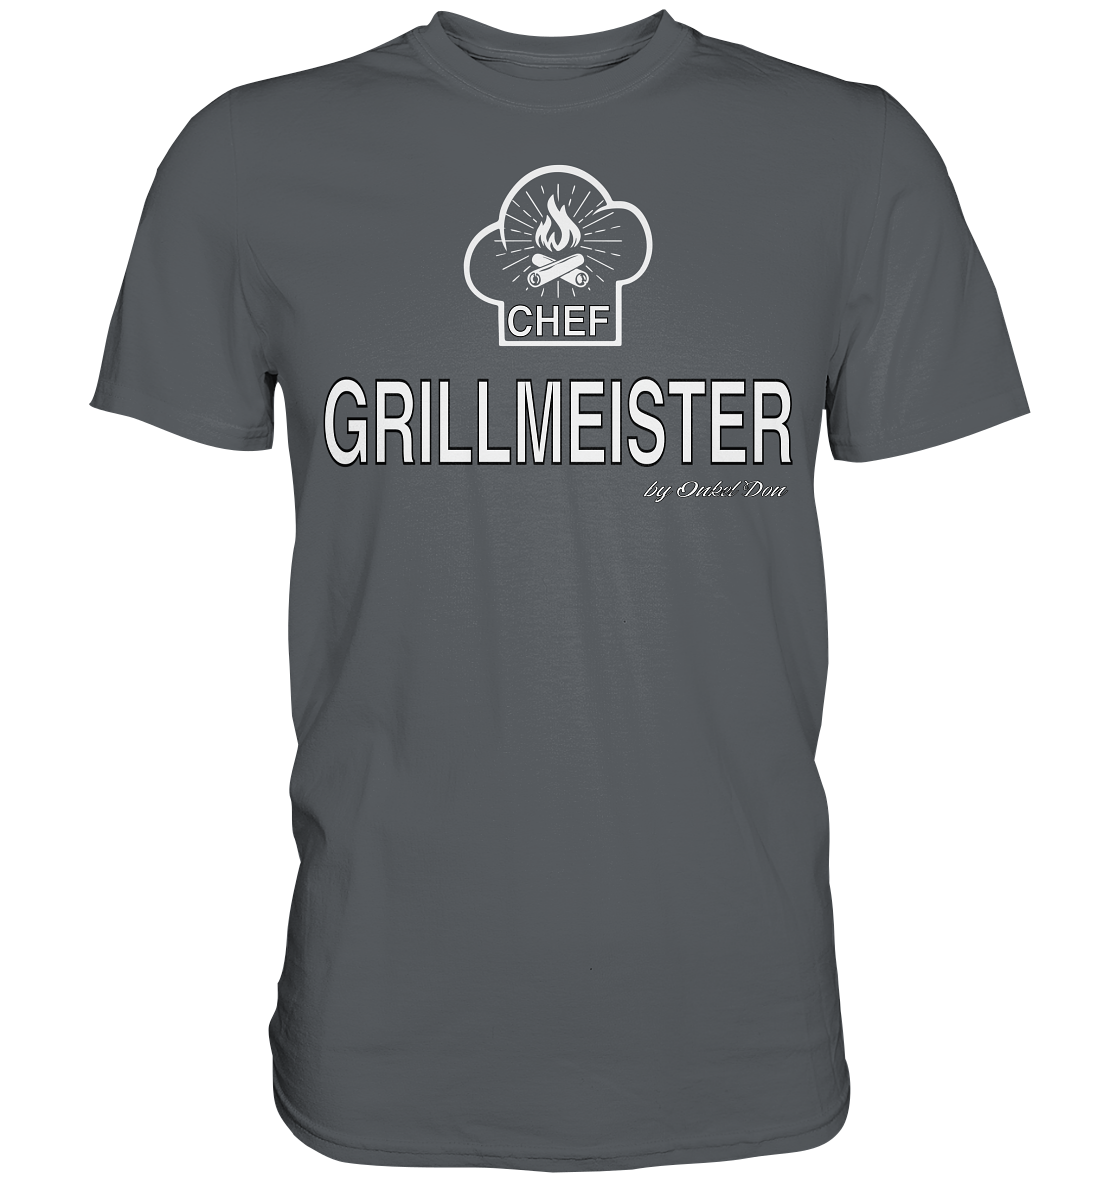 Grillmeister#2 - Herren Shirt - Onkel Don